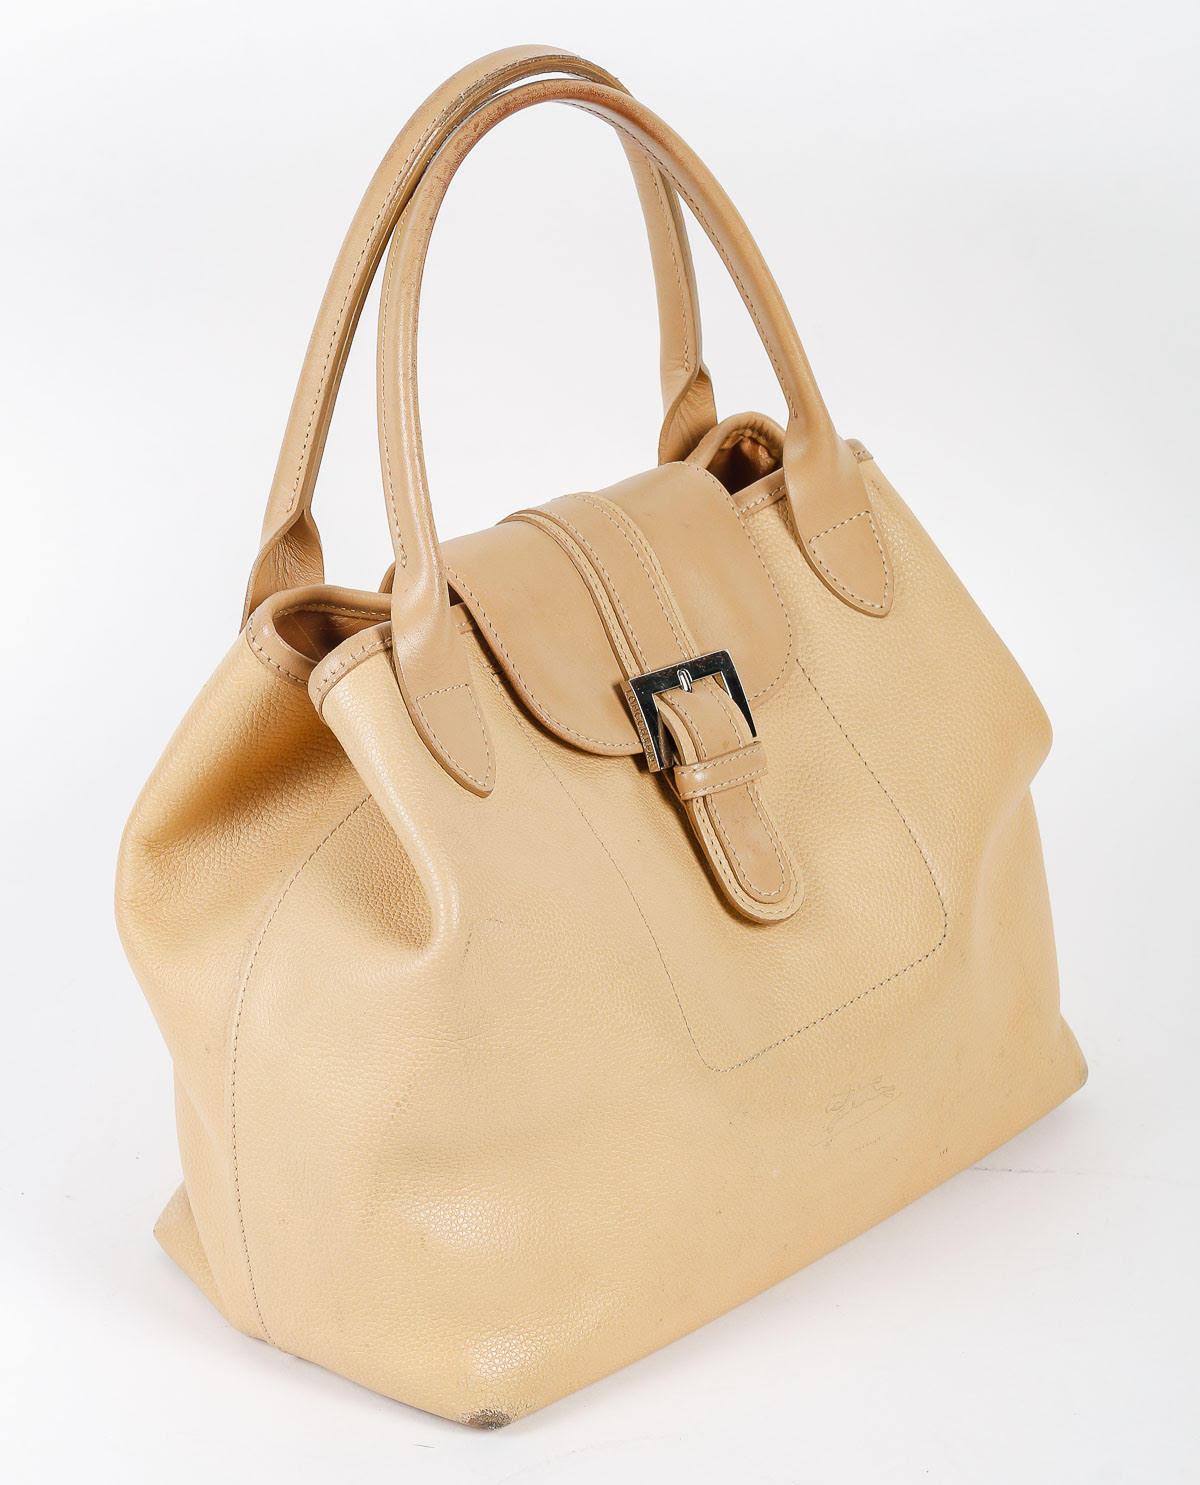 Handbag, Longchamp, Yellow leather, Chrome buckle, 20th century.

Handbag, Longchamp, chrome buckle, yellow leather, good condition, 20th century.    
h: 25cm , w: 29cm, d: 16cm